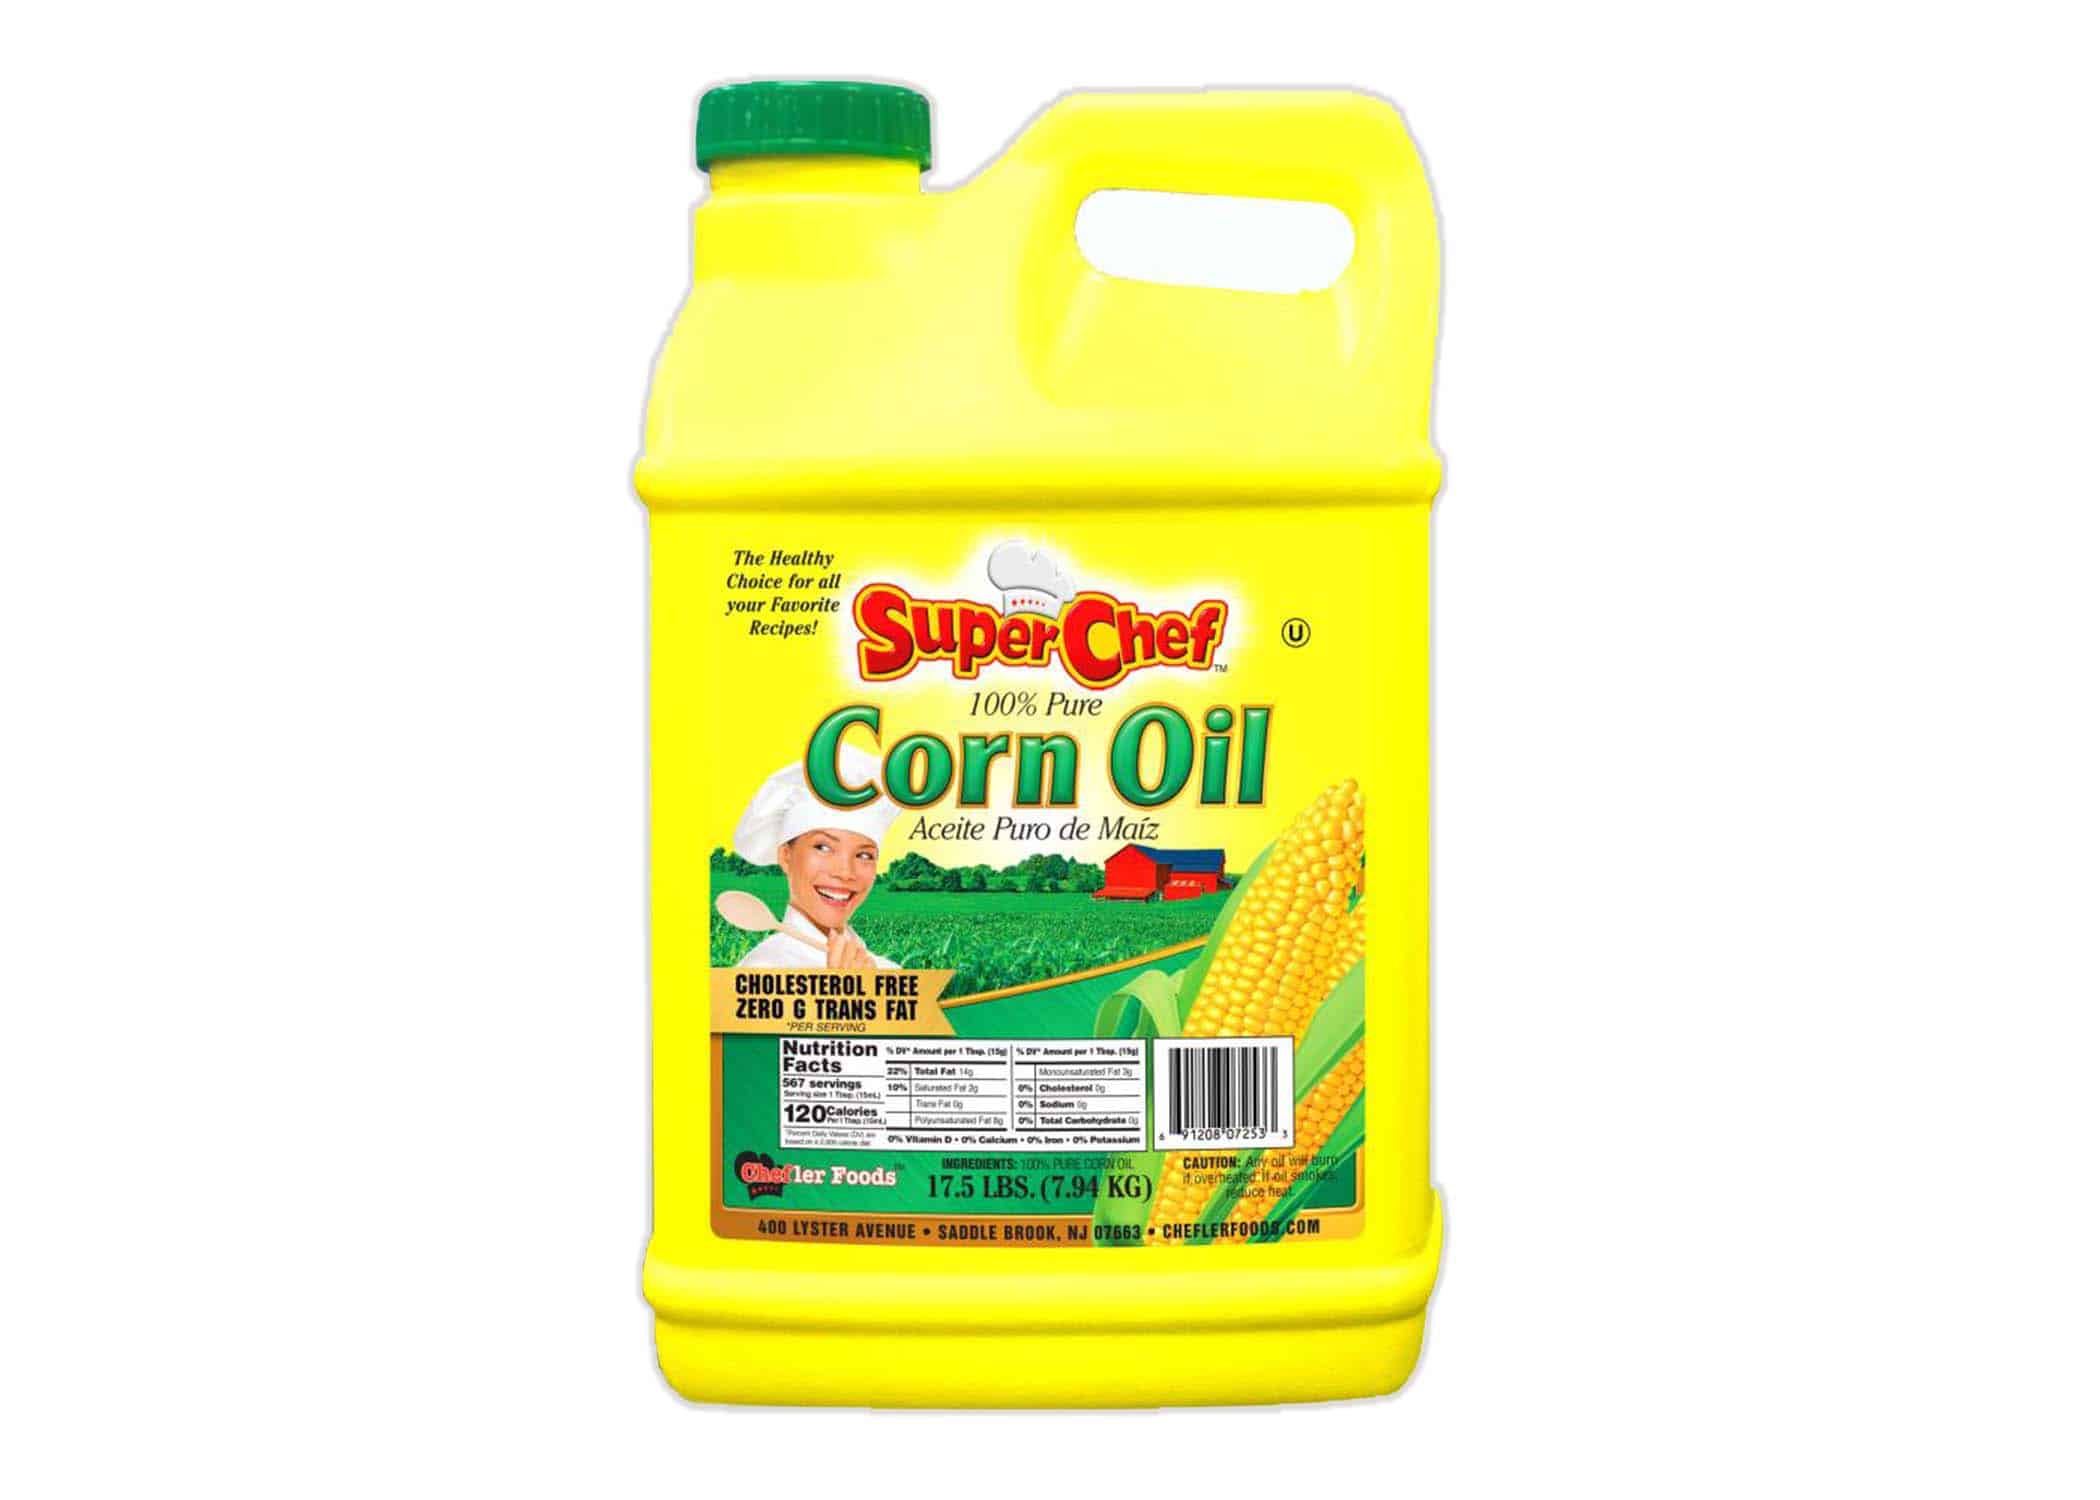 SC corn oil